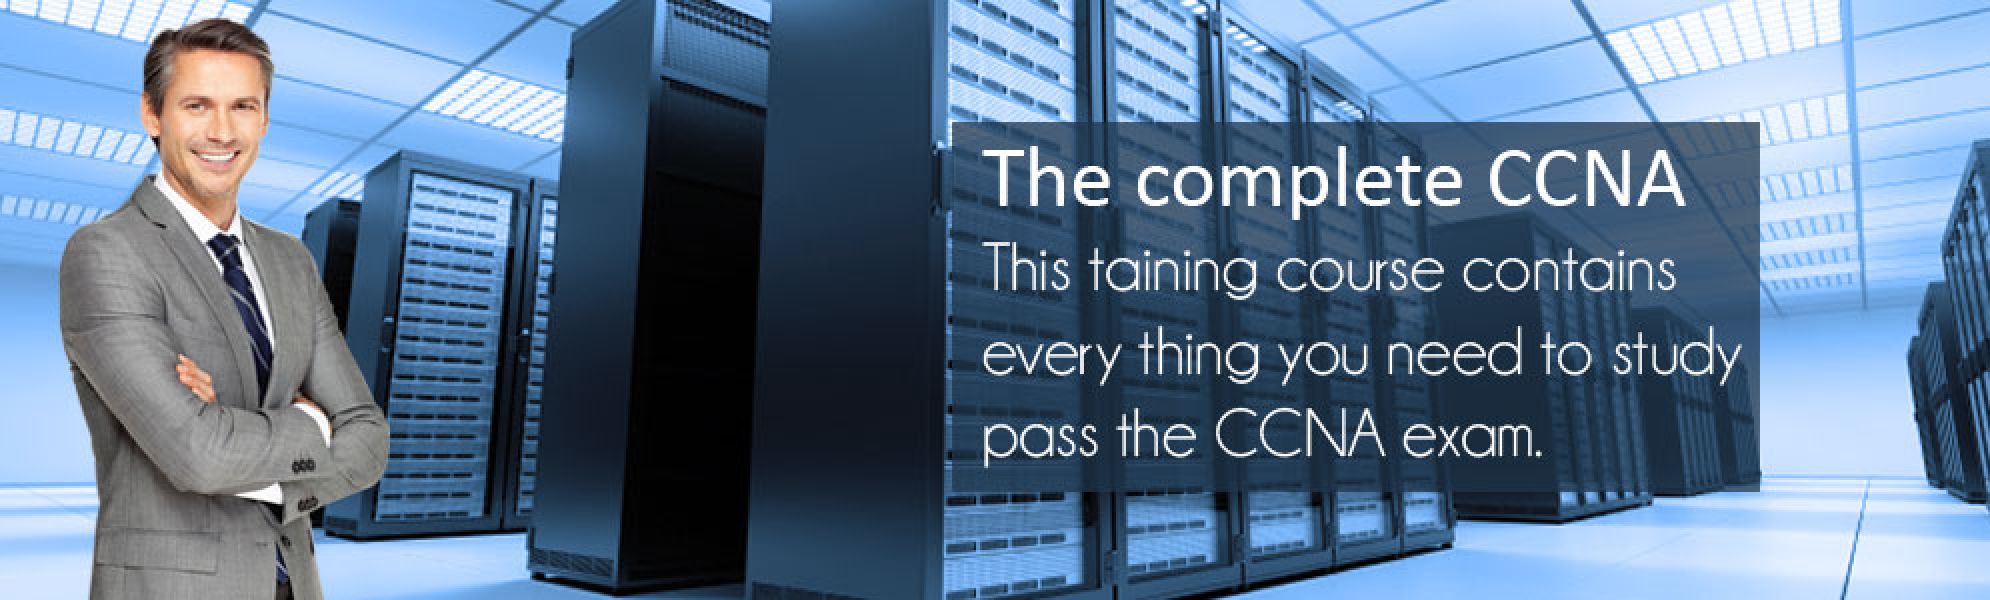 Ccna online training - CISCO Certification Training